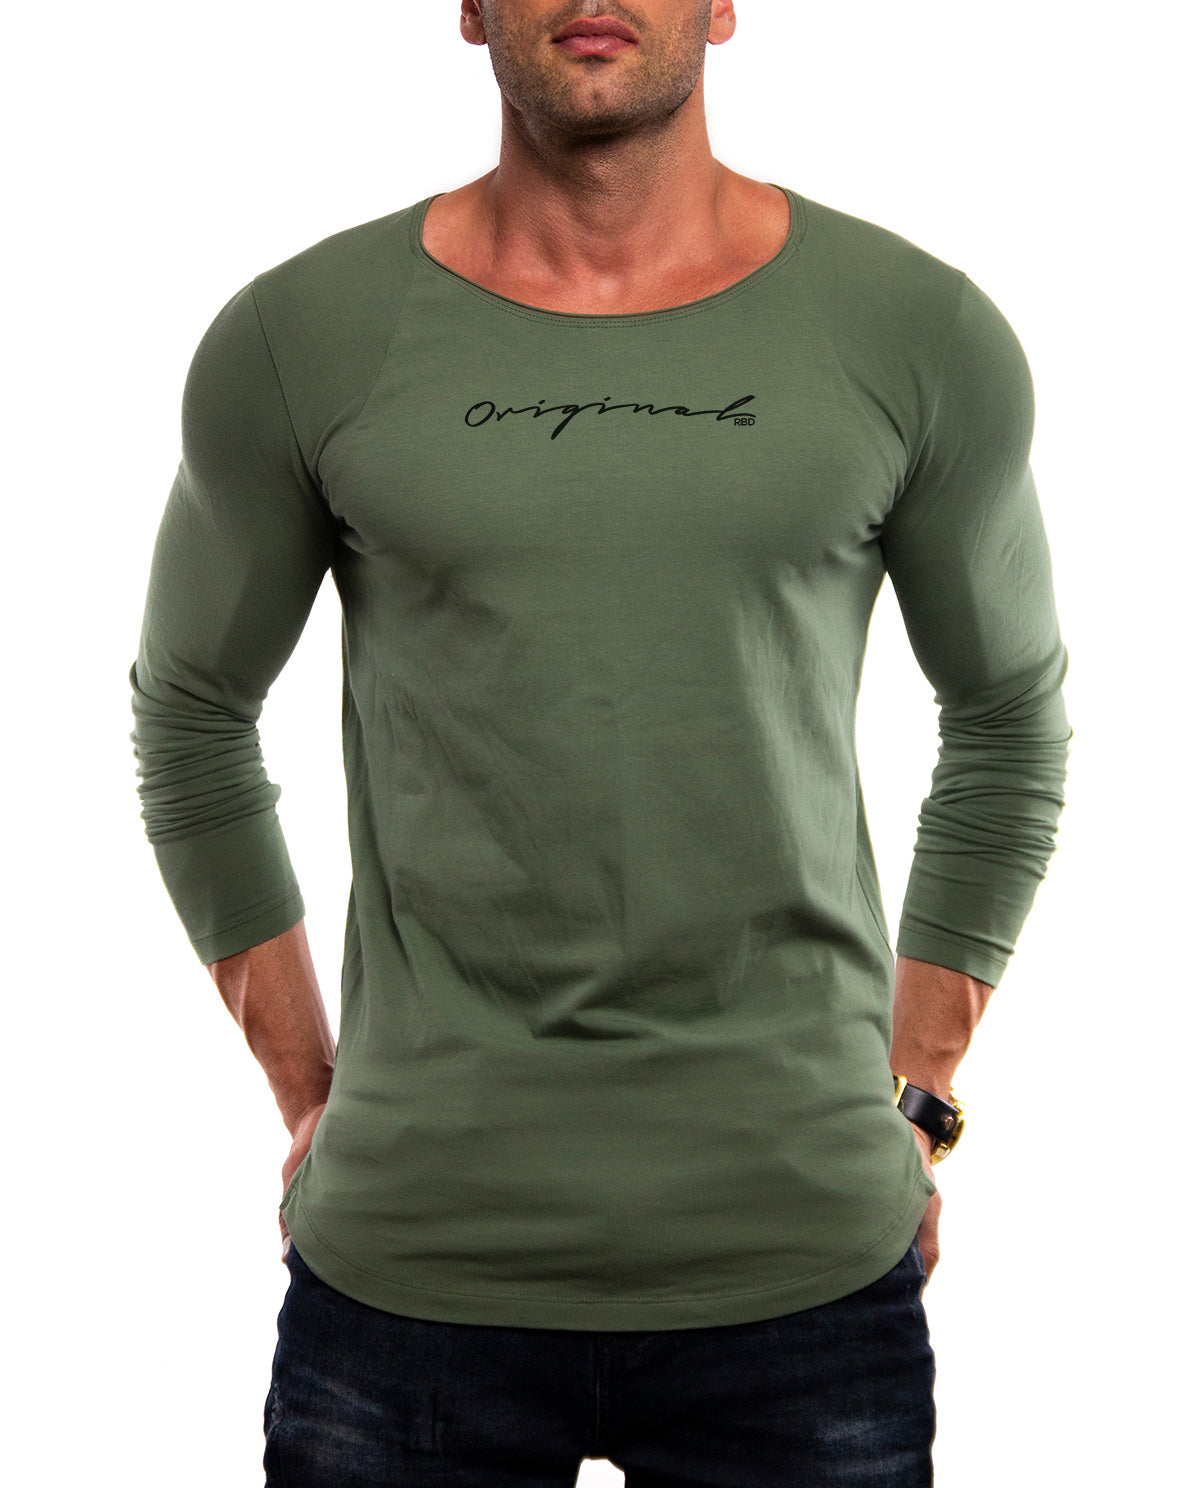 Mens Long Sleeve T-shirt "Originals" MD954